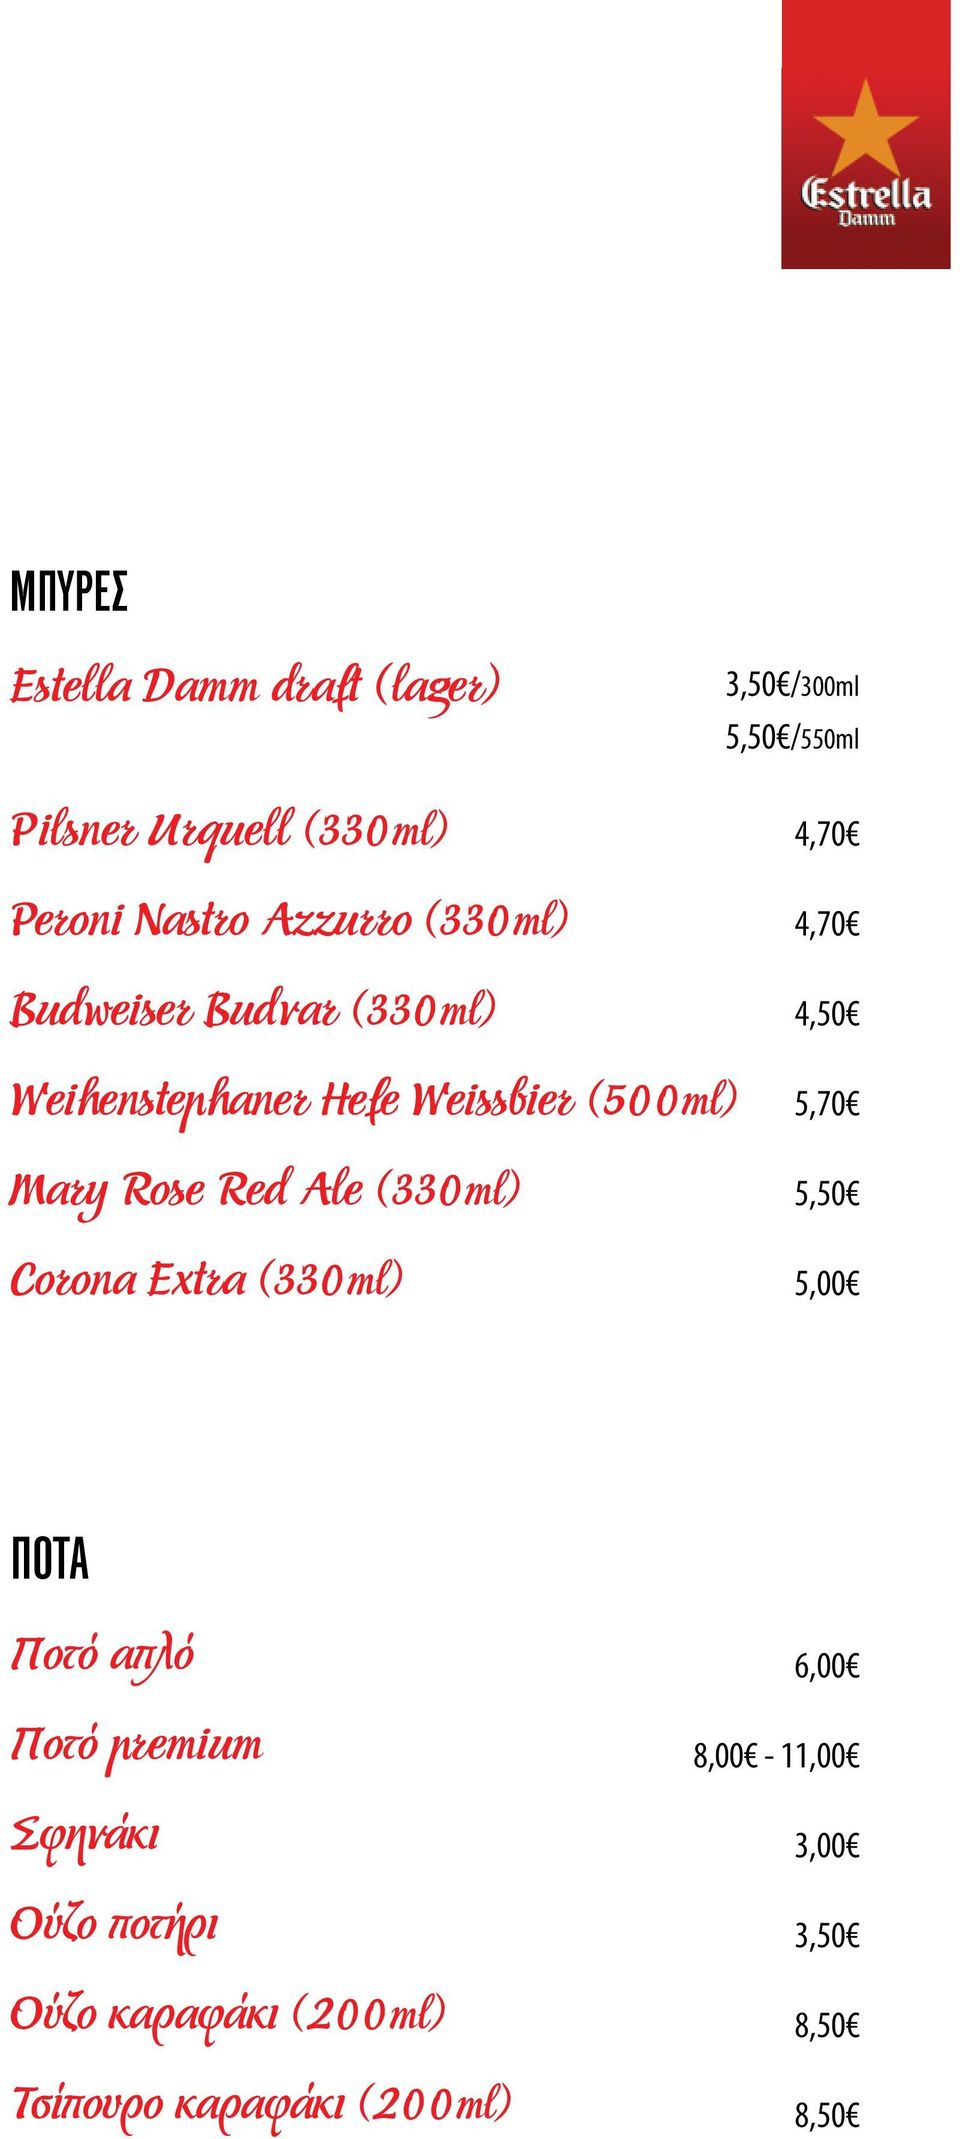 Rose Red Ale (330ml) Corona Extra (330ml) 4,70 4,70 5,70 5,50 ΠΟΤΆ Ποτό απλό Ποτό premium